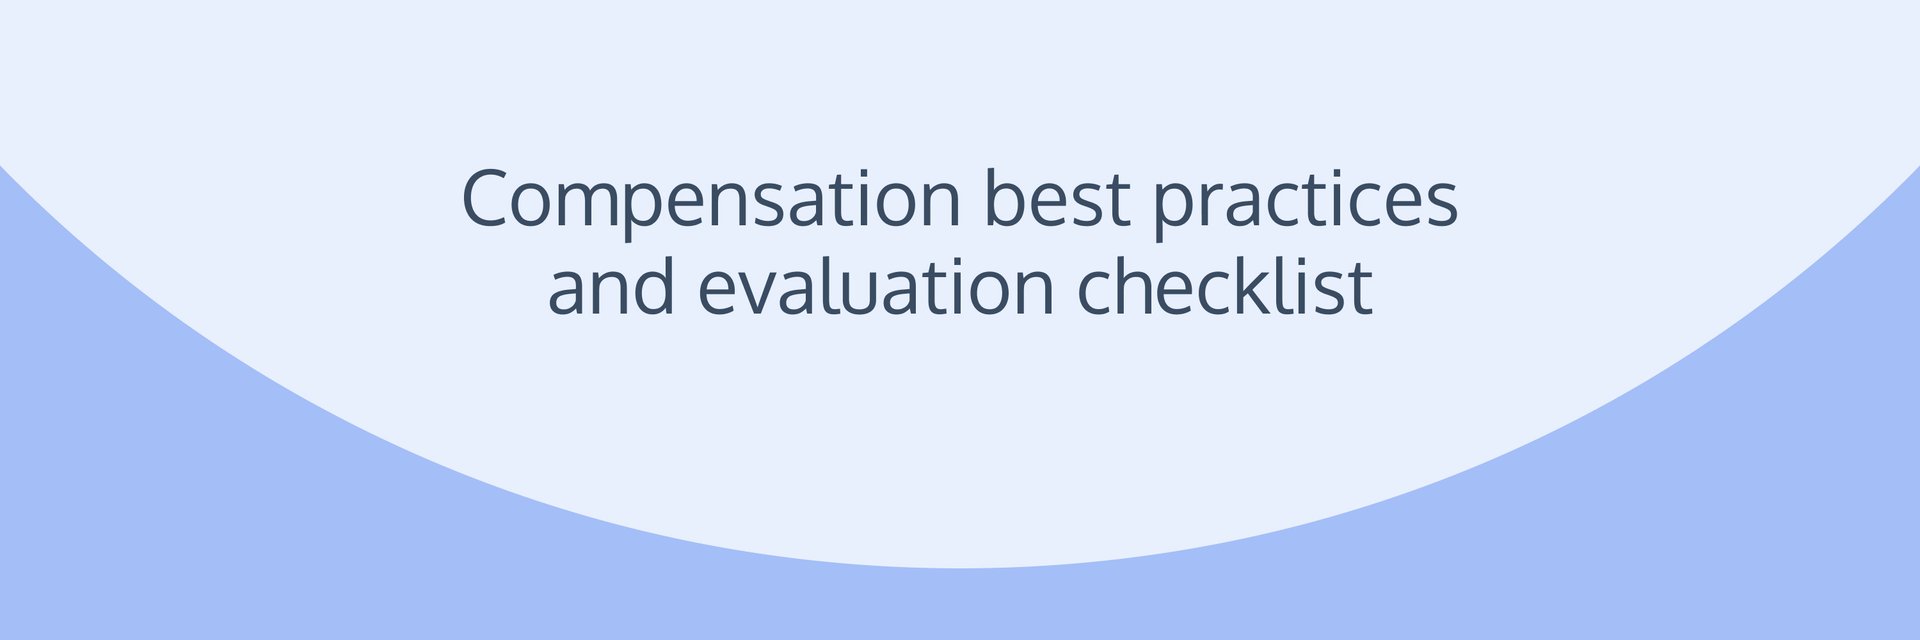 Compensation best practices & evaluation checklist